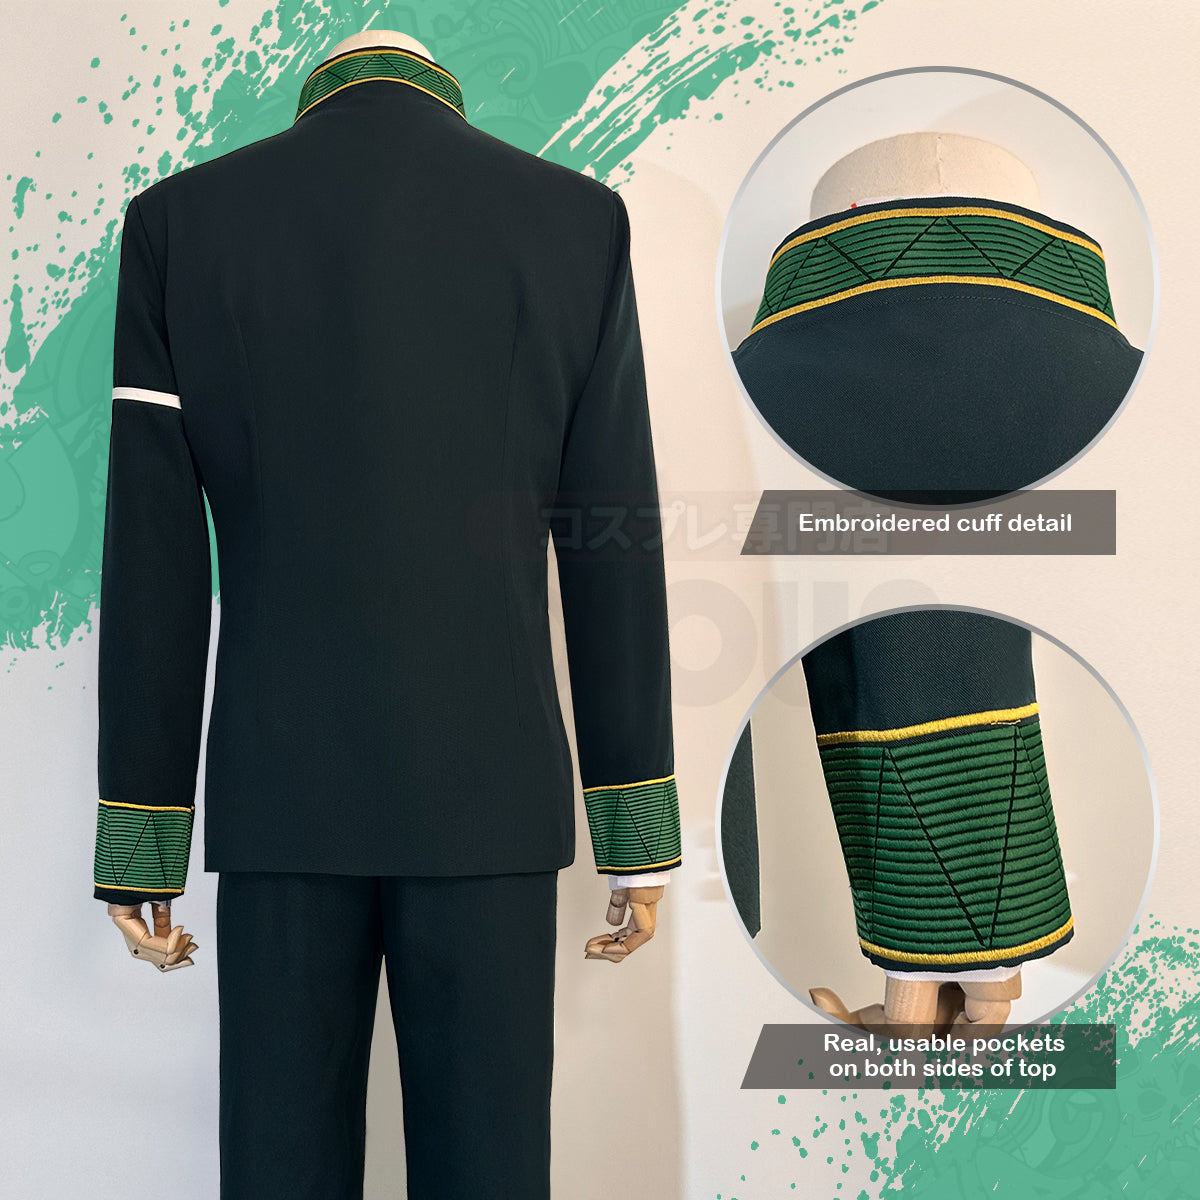 HOLOUN Wind Breaker Anime kiryu mitsuki Cosplay Costume School Uniform Green Jacket Pants Shirt Belt Cos Convention Halloween